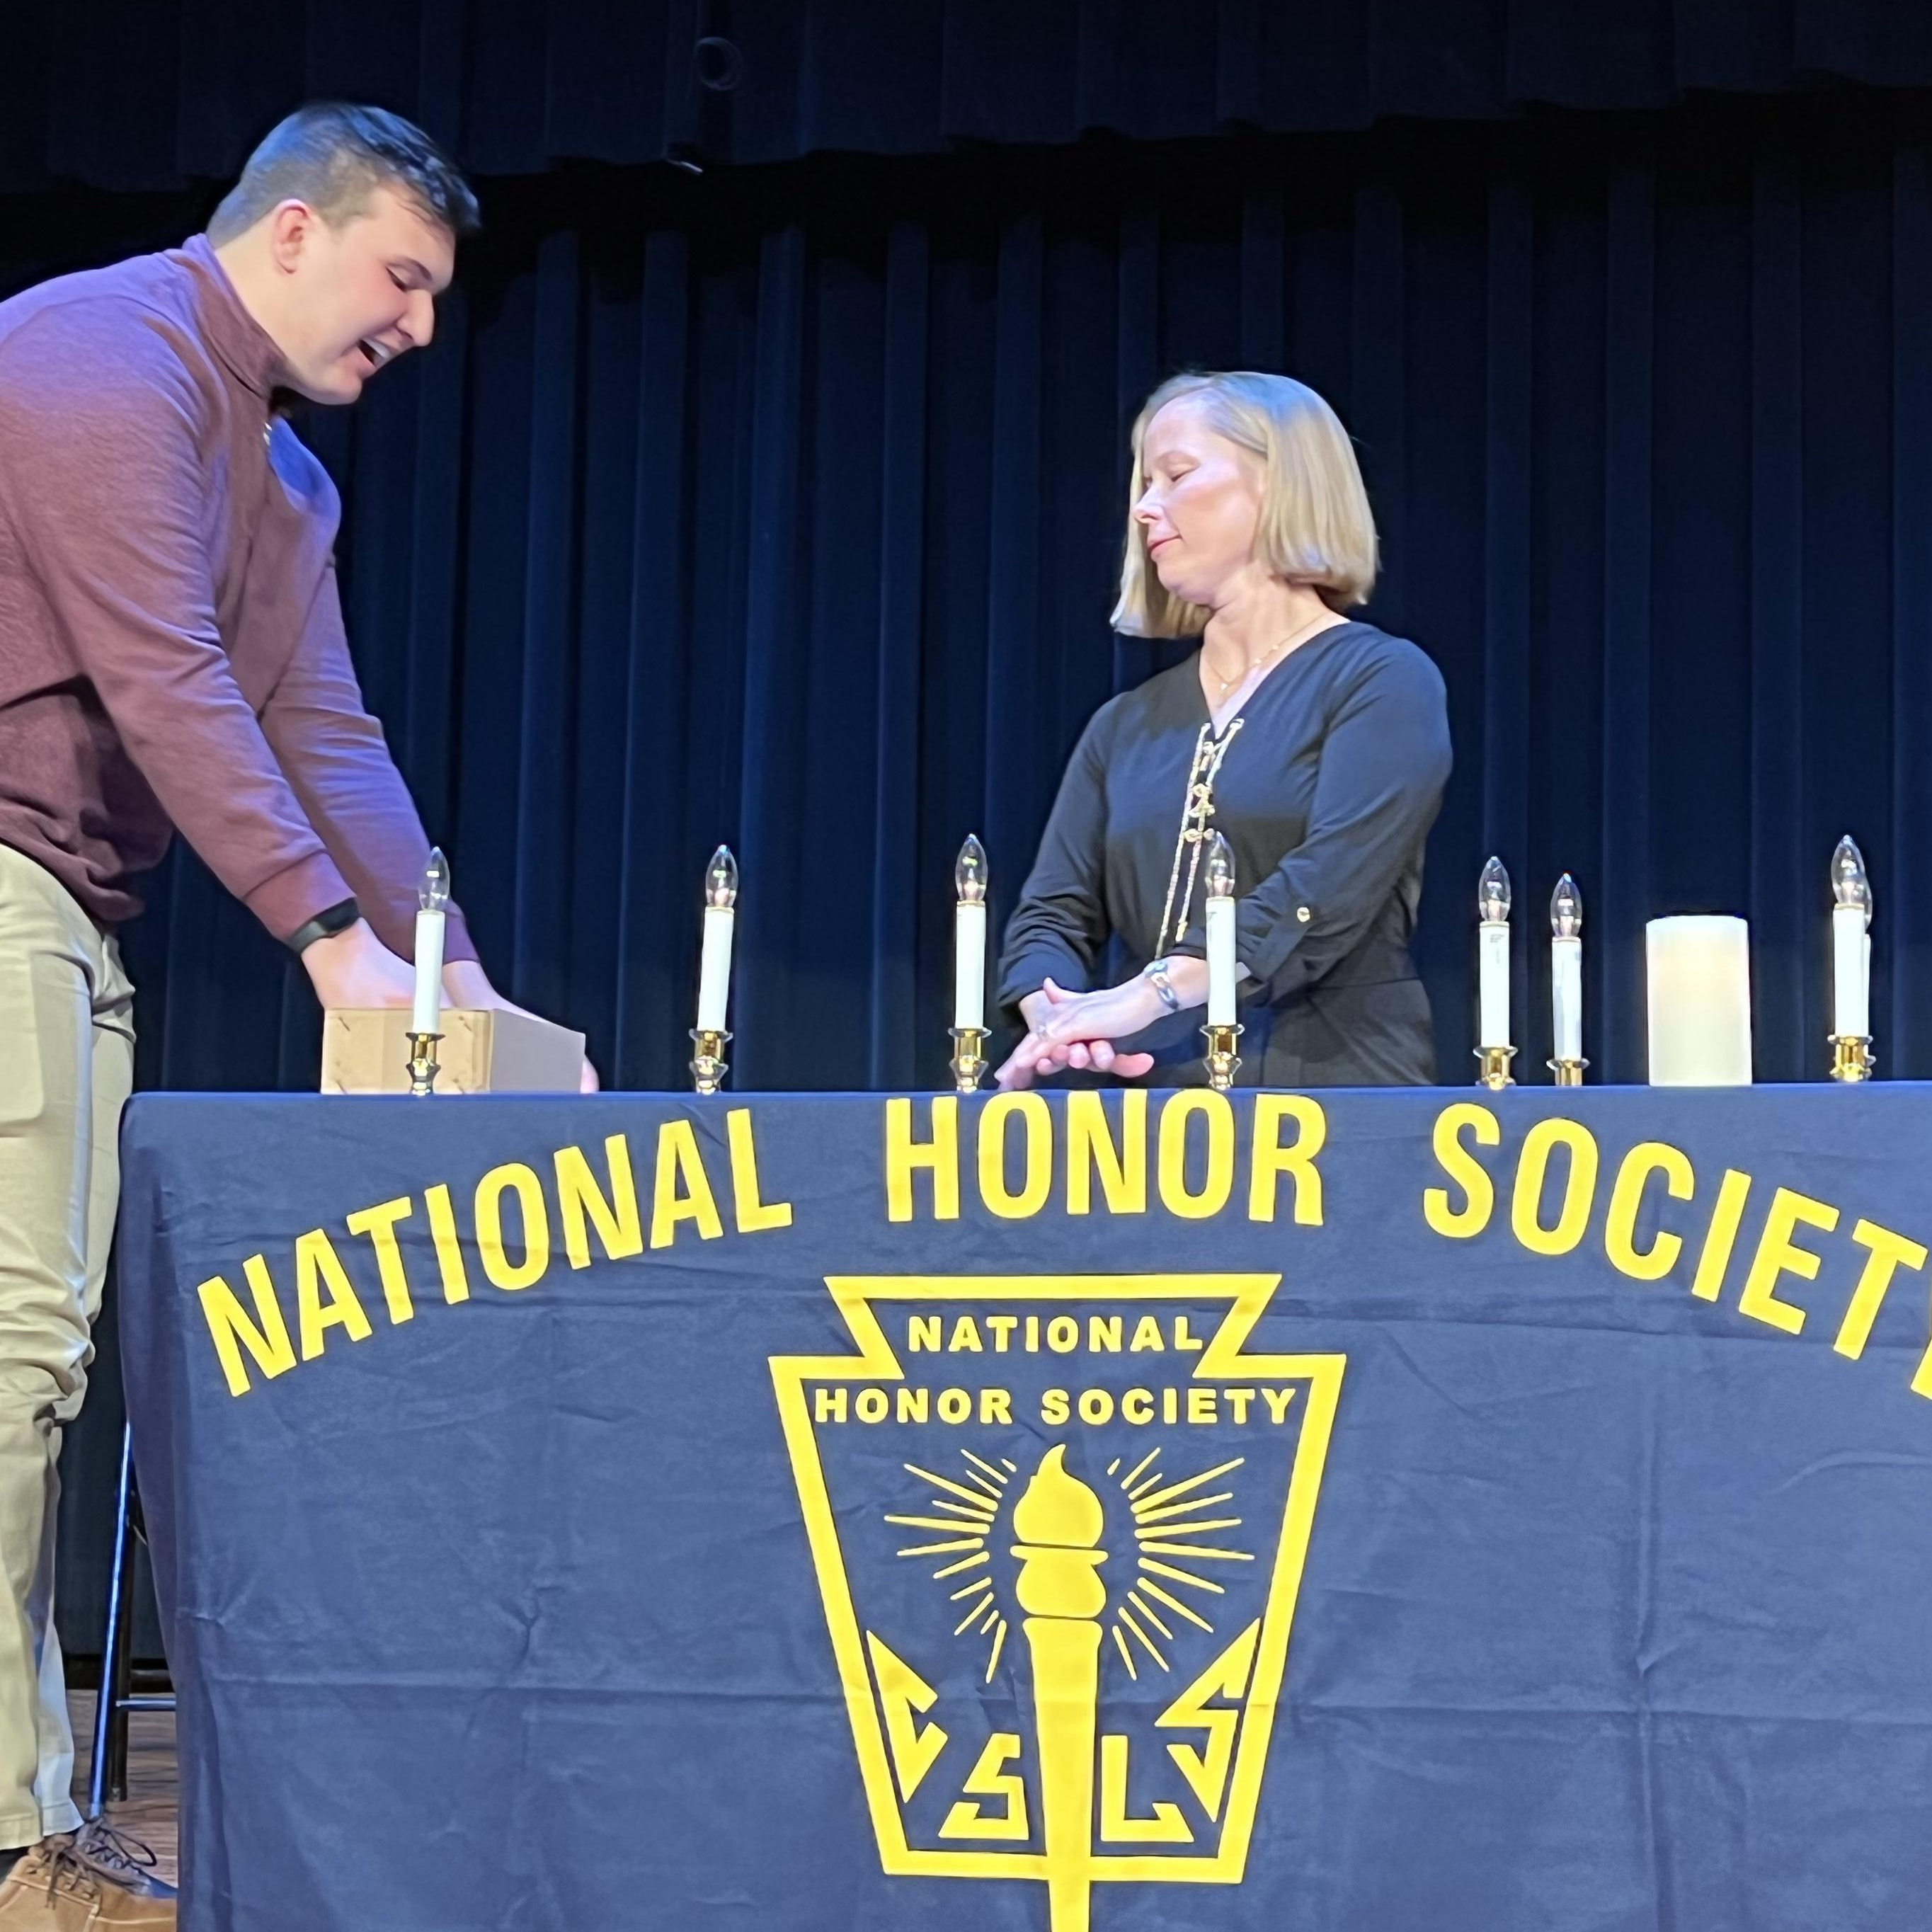 National Honor Society event photos